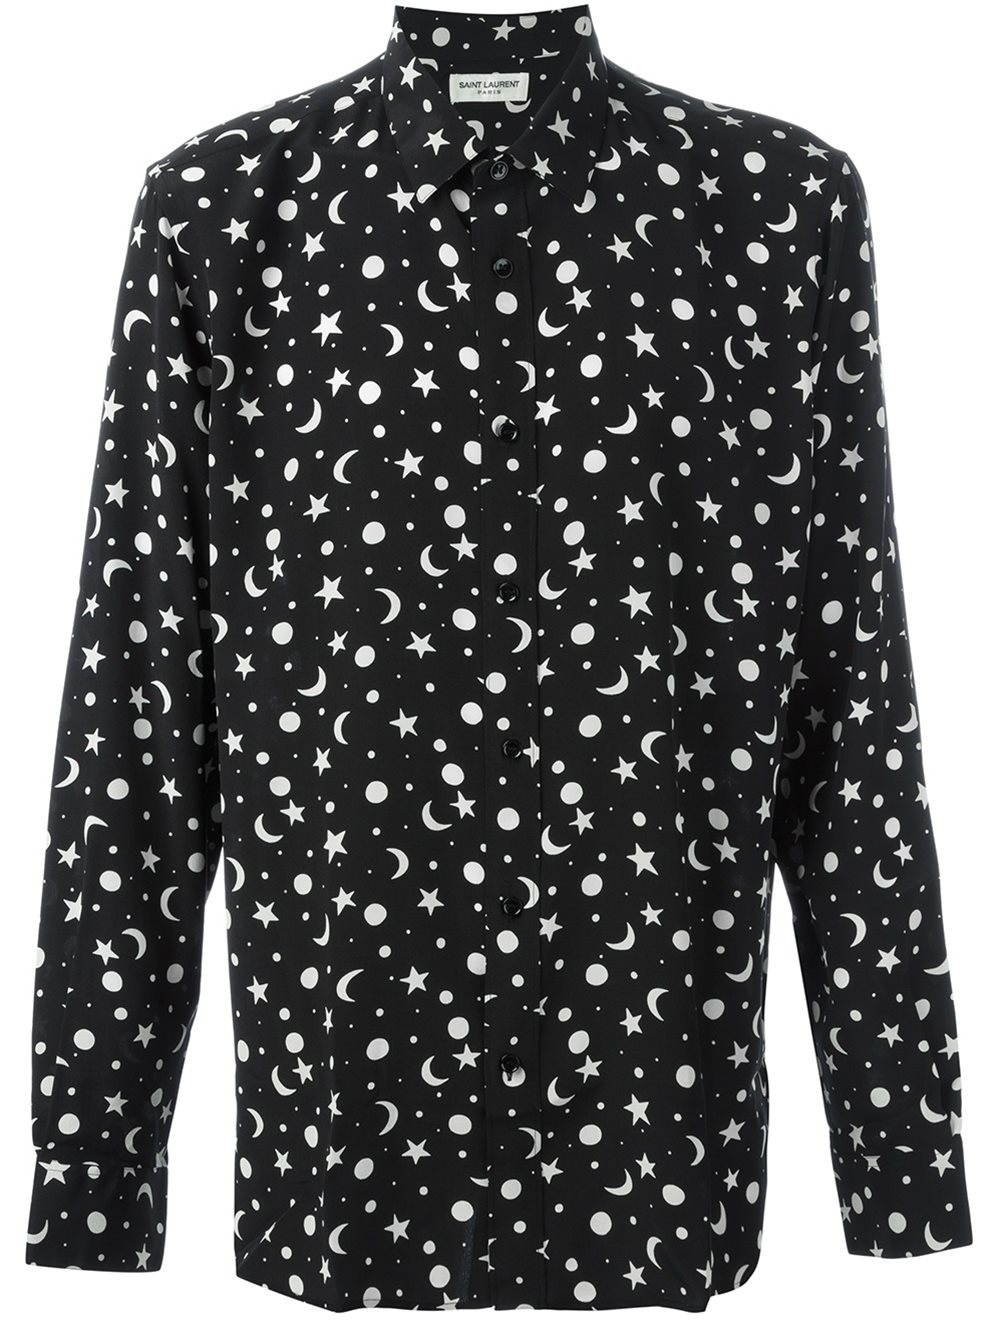 Saint Laurent Silk Star And Moon Print Shirt in Black for Men - Lyst